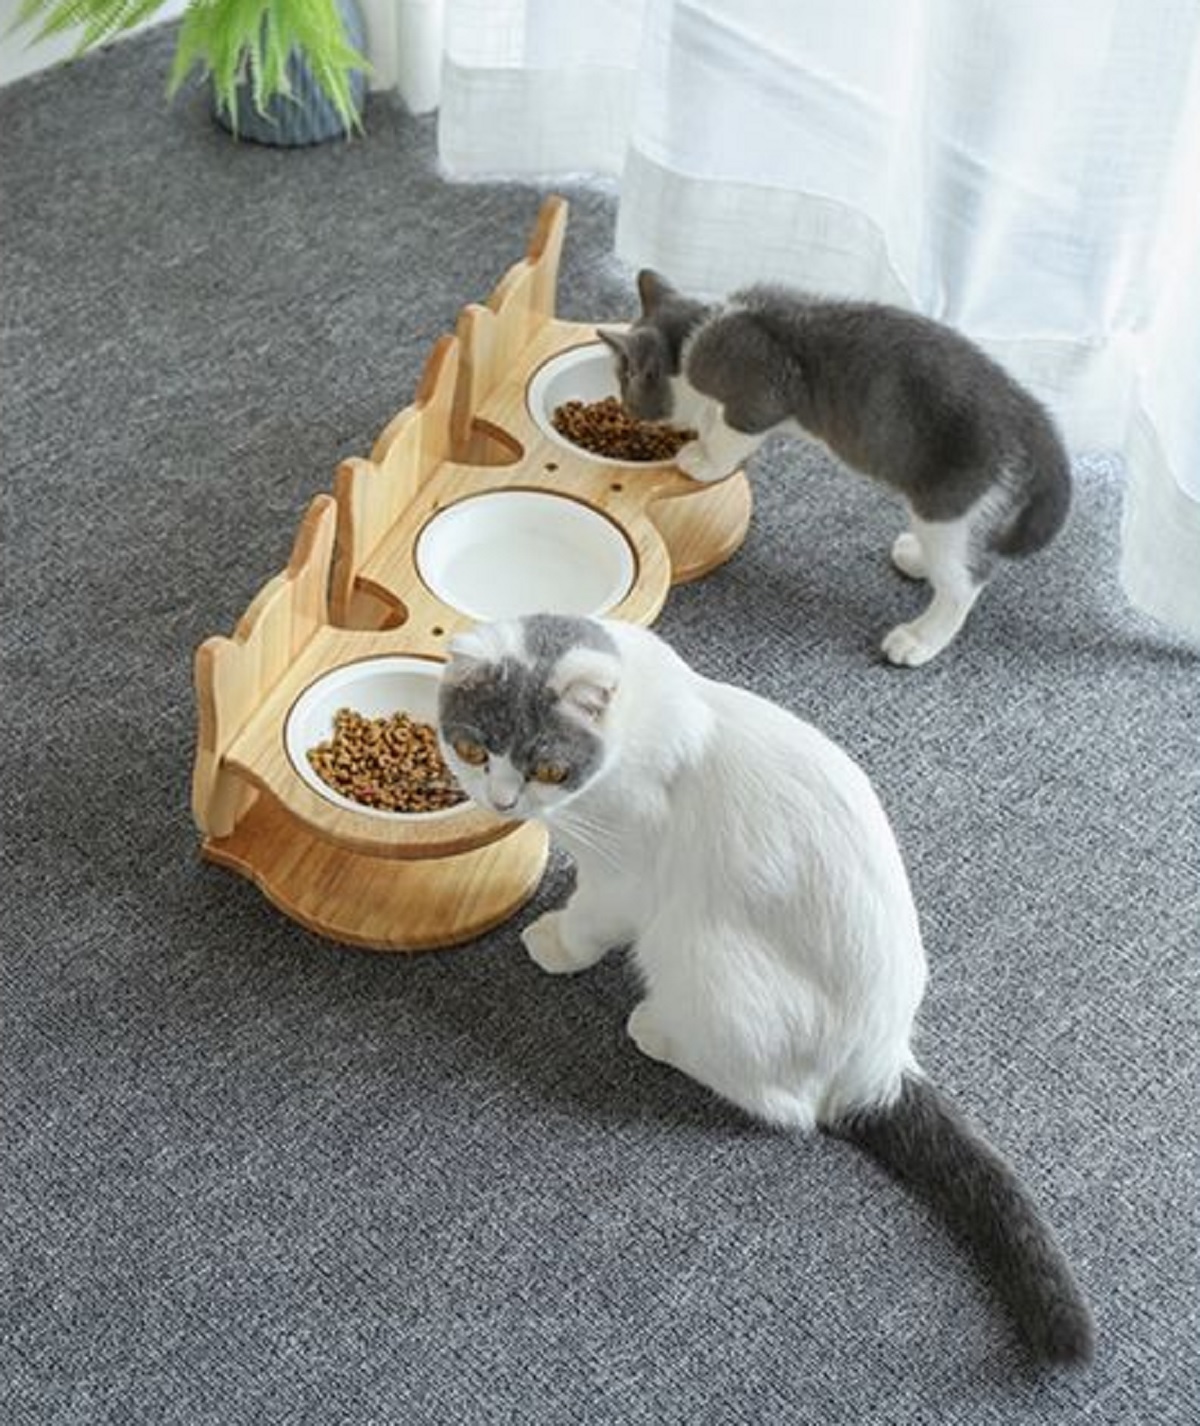 Inilah 4 Poin Penting Yang Perlu Diketahui Sebelum Memberi Makan Kucing Yang Tepat Sesuai Dengan Usianya